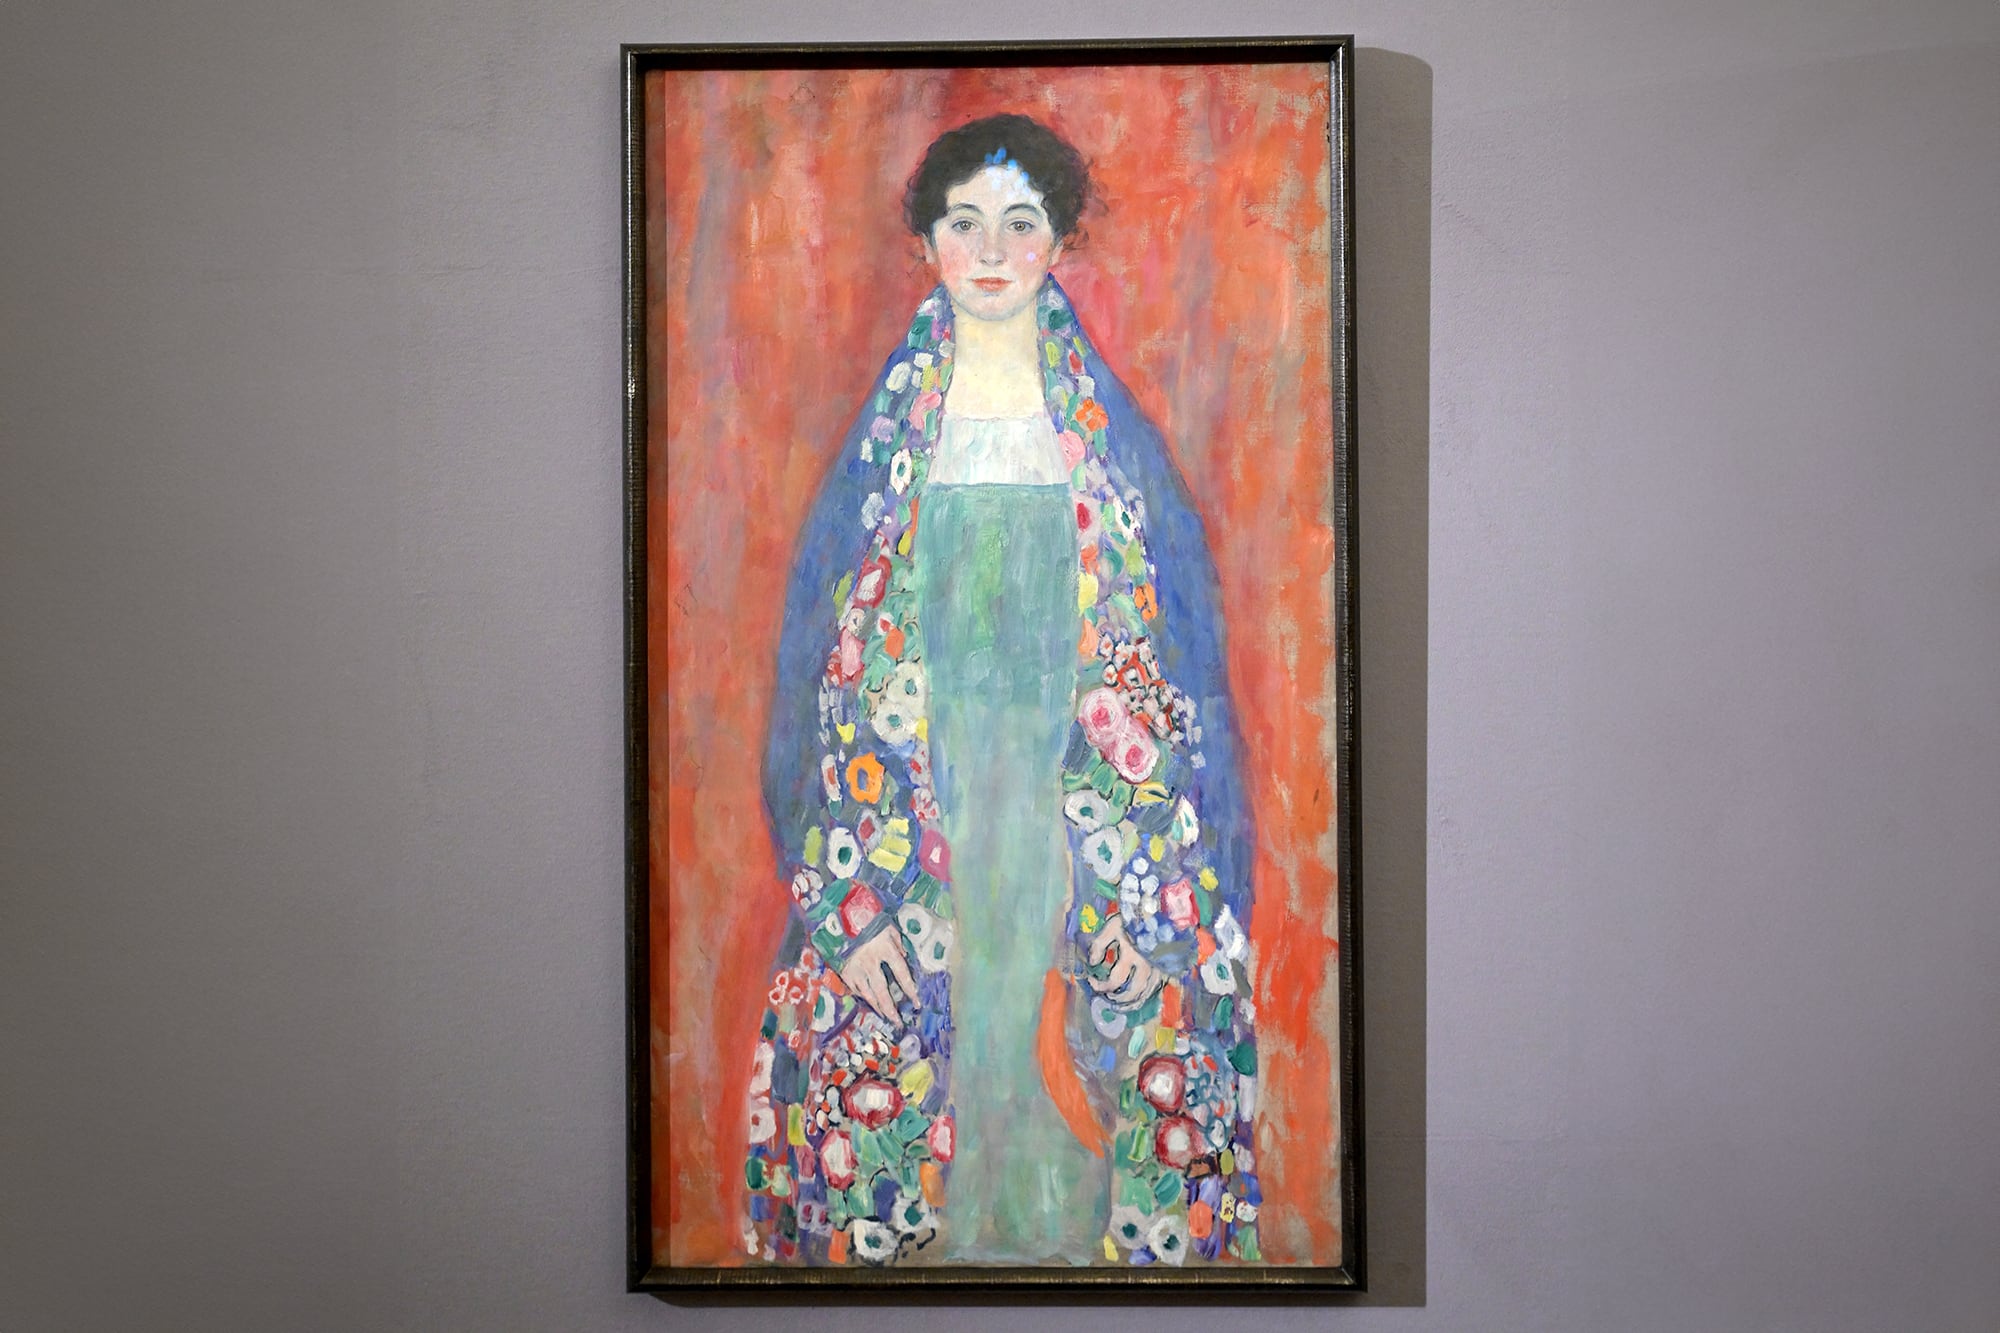 Subastaron un misterioso cuadro de Klimt por 30 millones de euros